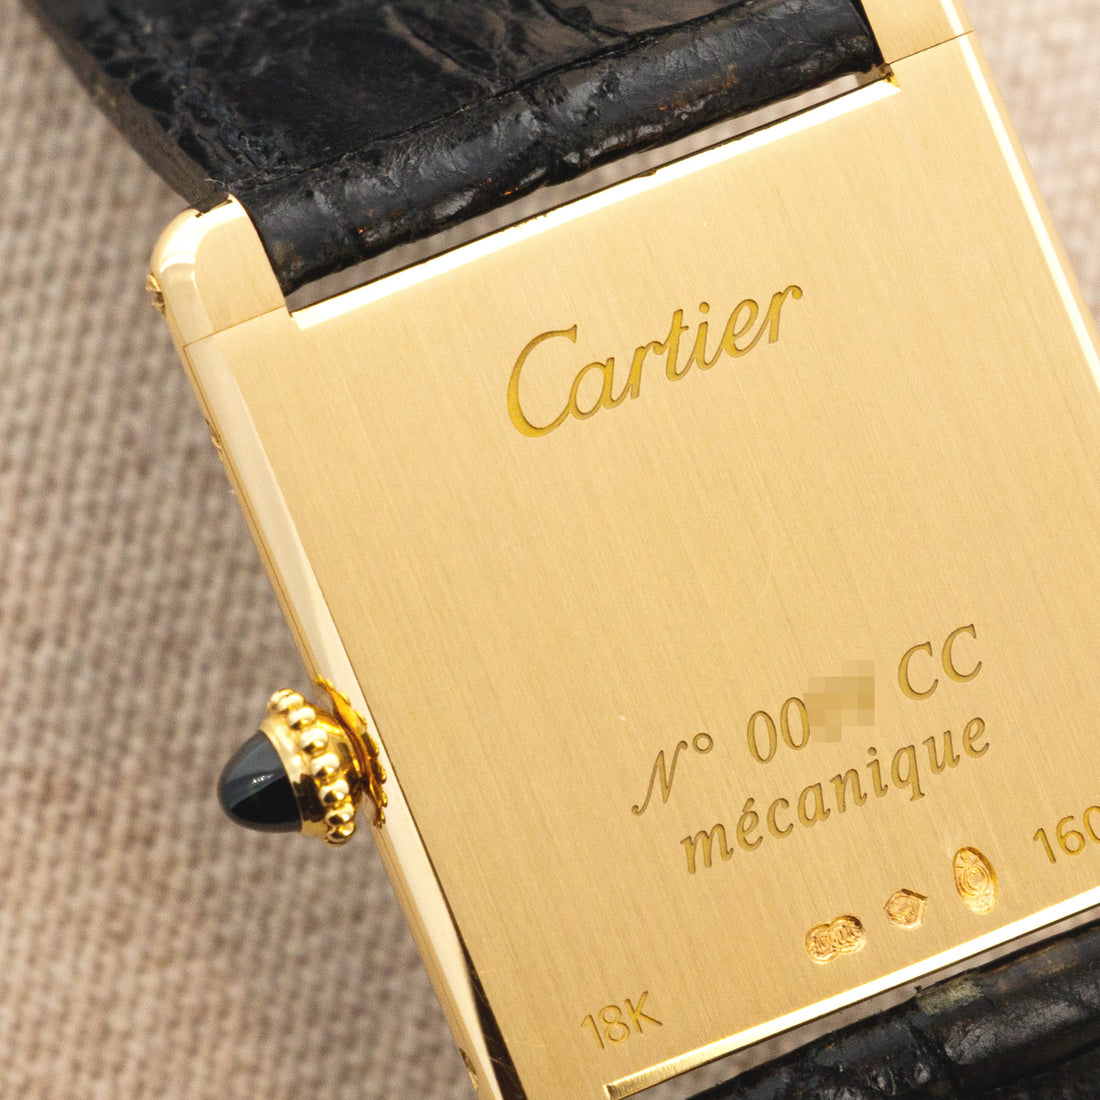 Cartier Yellow Gold Tank Louis Ref. 1600